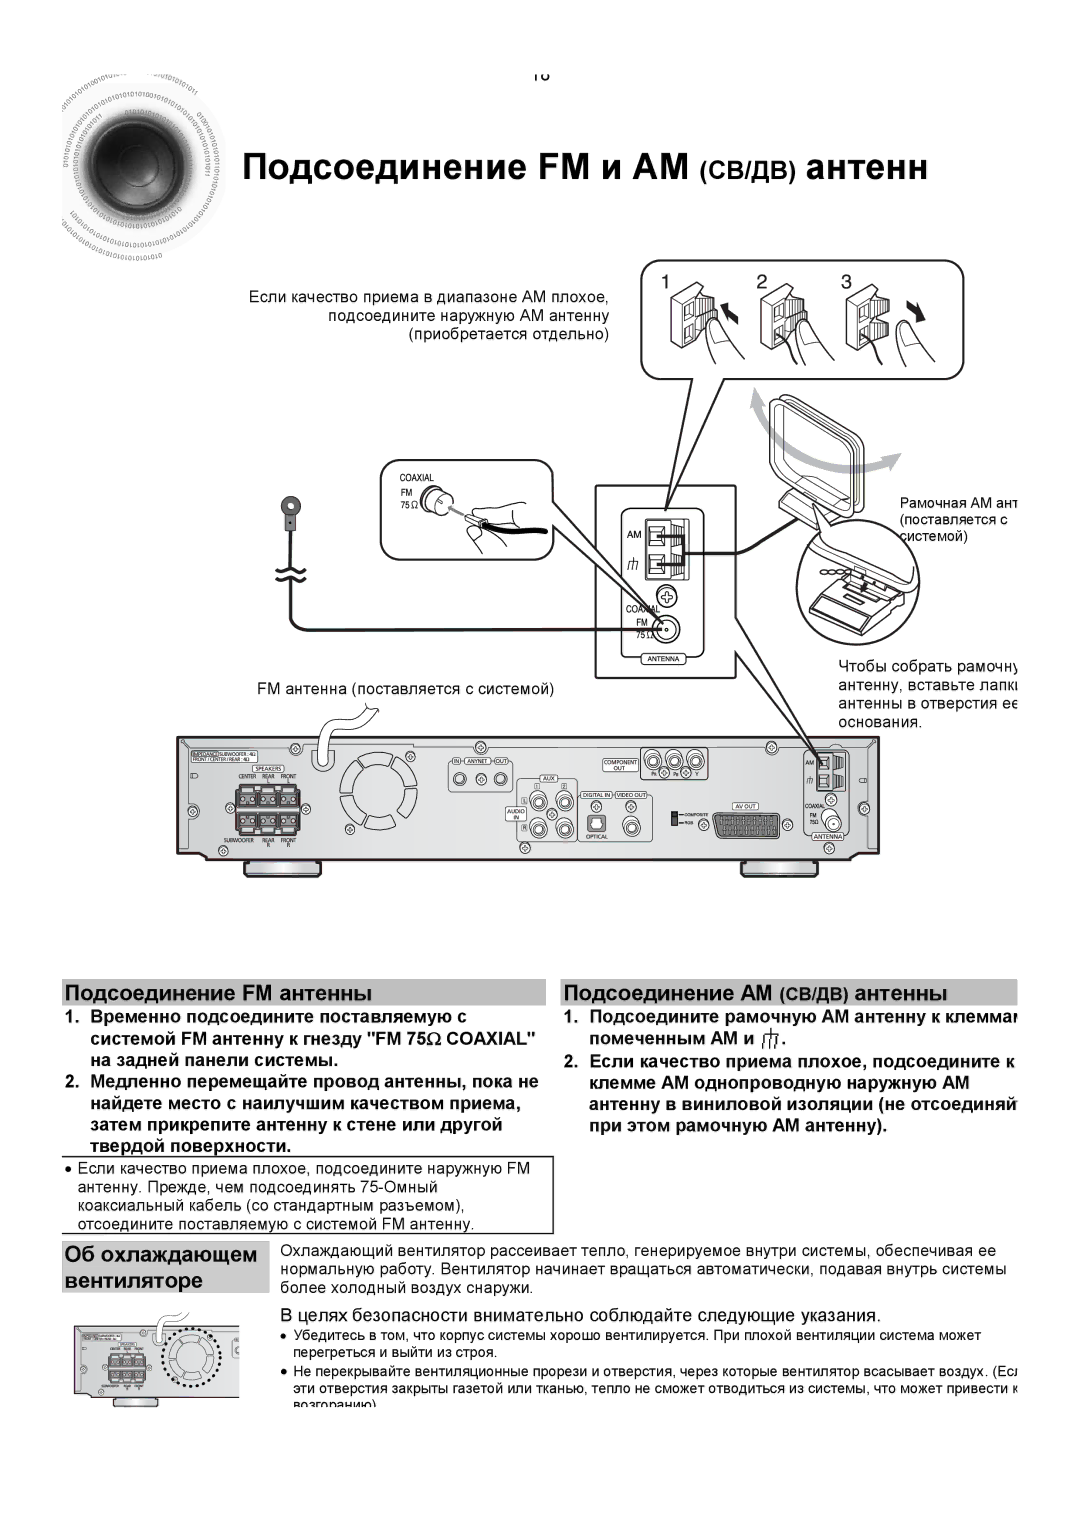 Samsung HT-DS420RH/XFO manual Подсоединение FM и AM СВ/ДВ антенн, Подсоединение FM антенны Подсоединение AM СВ/ДВ антенны 